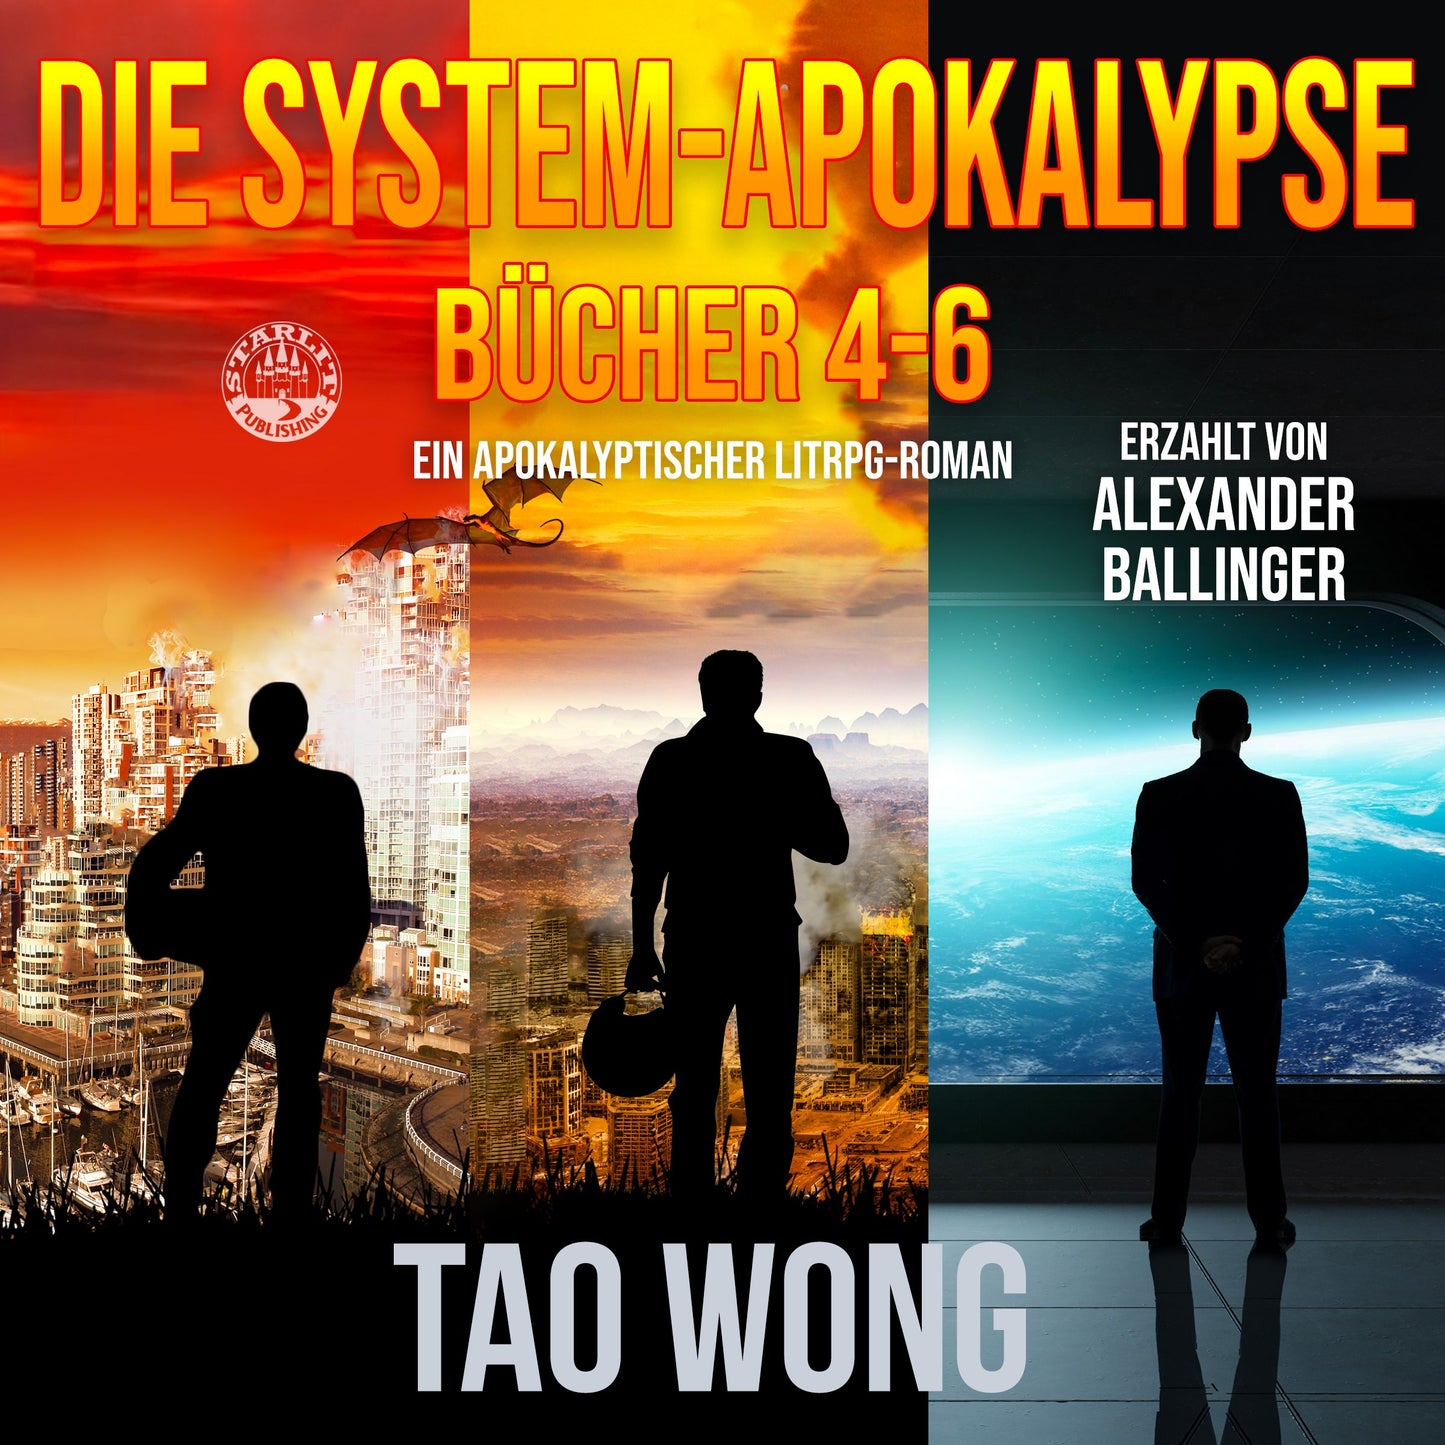 Die System-Apokalypse: Bücher 4-6